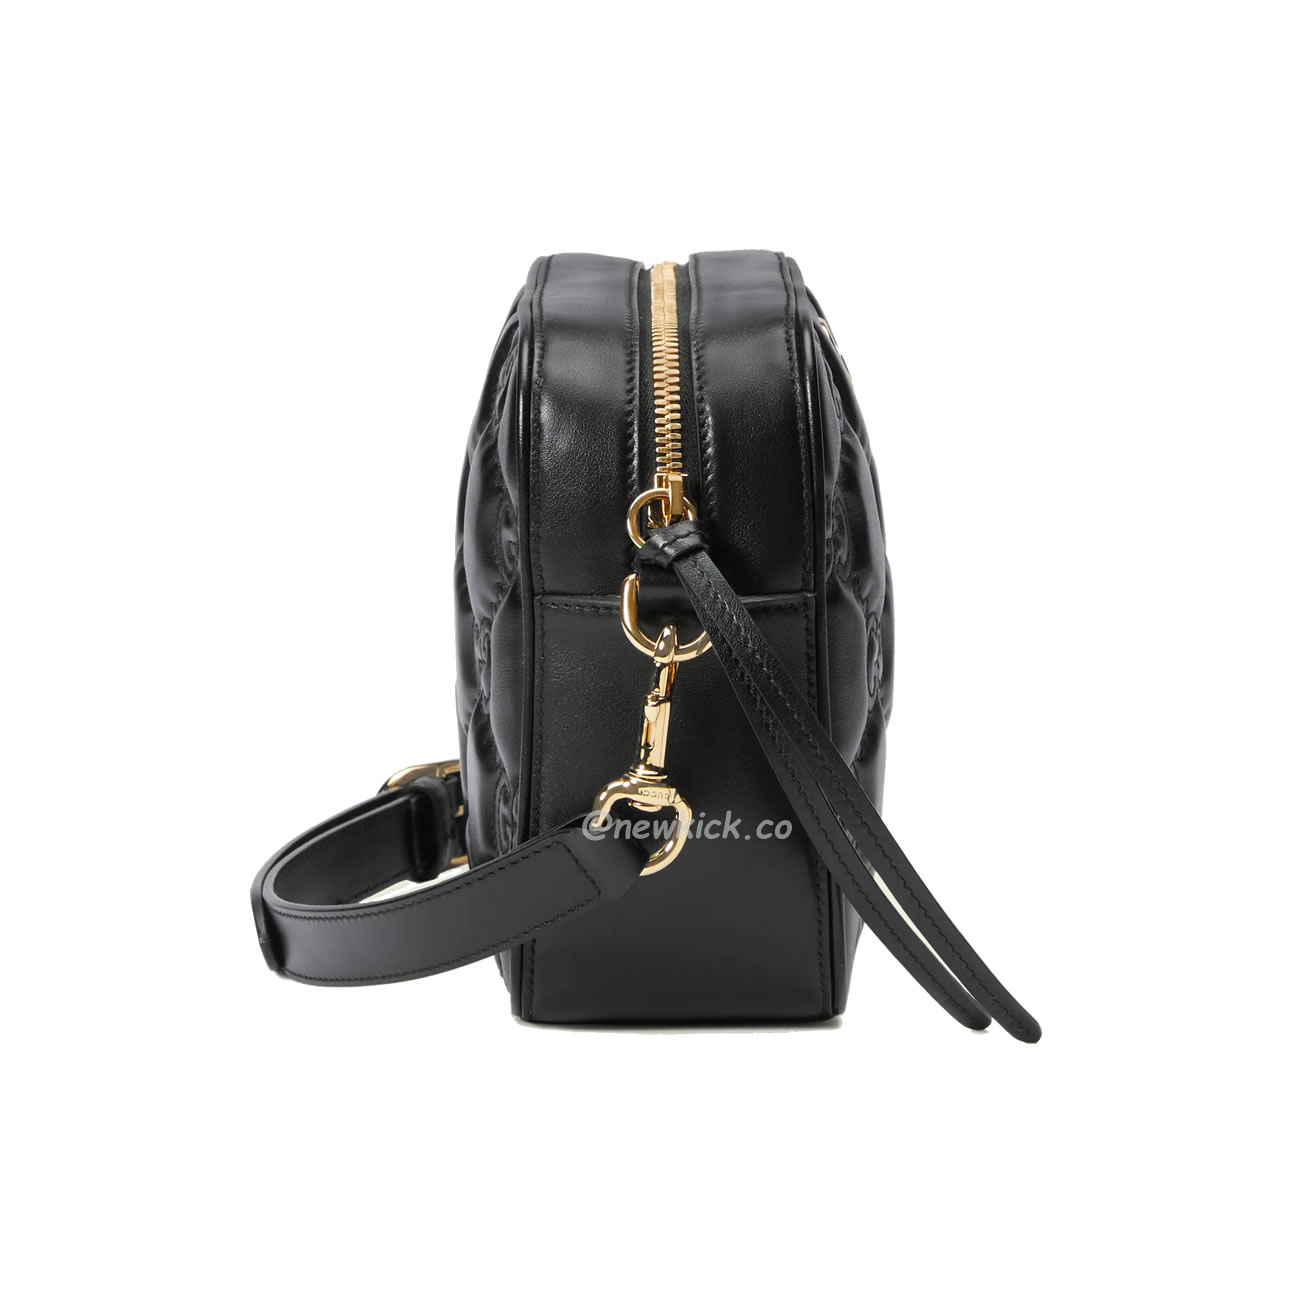 Gucci Gg Matelass Small Bag Product Details 702234 Um8hg 1046 (7) - newkick.org